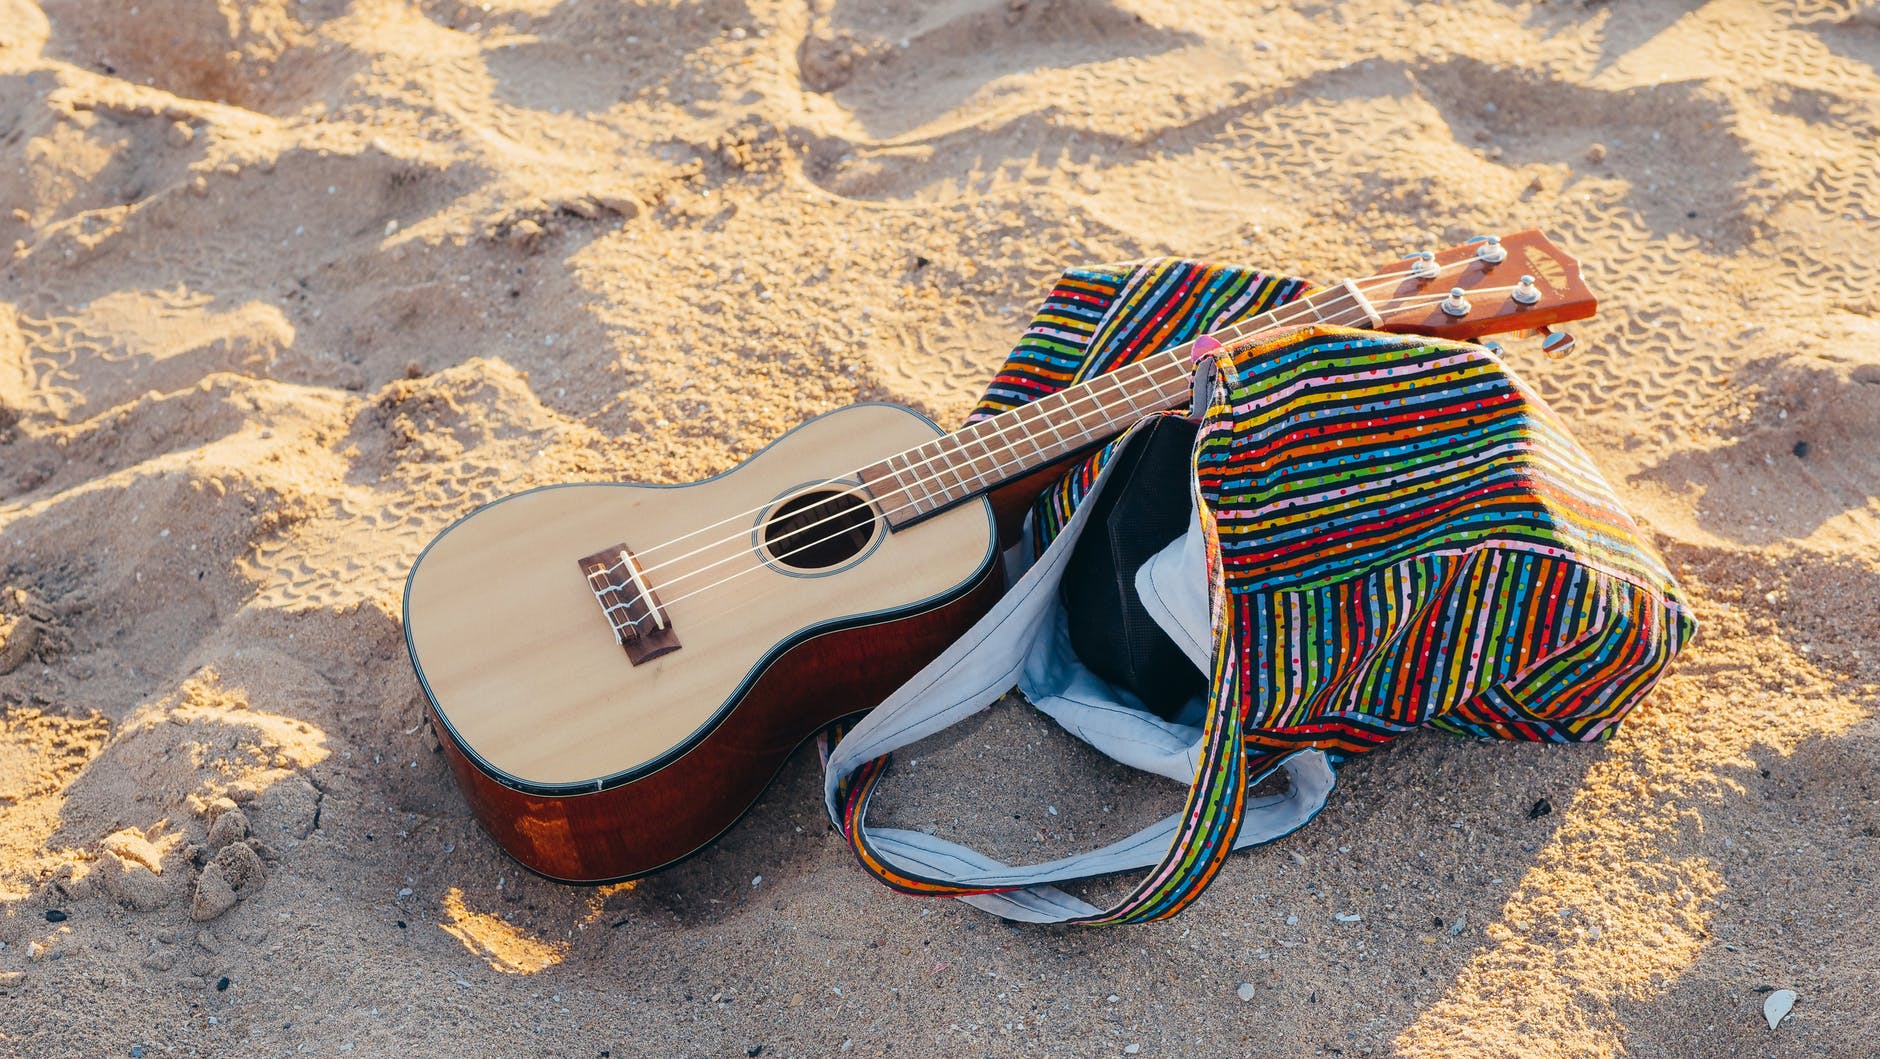 beach bag and guitar on beach sand
learn guitar
guitar tricks review
